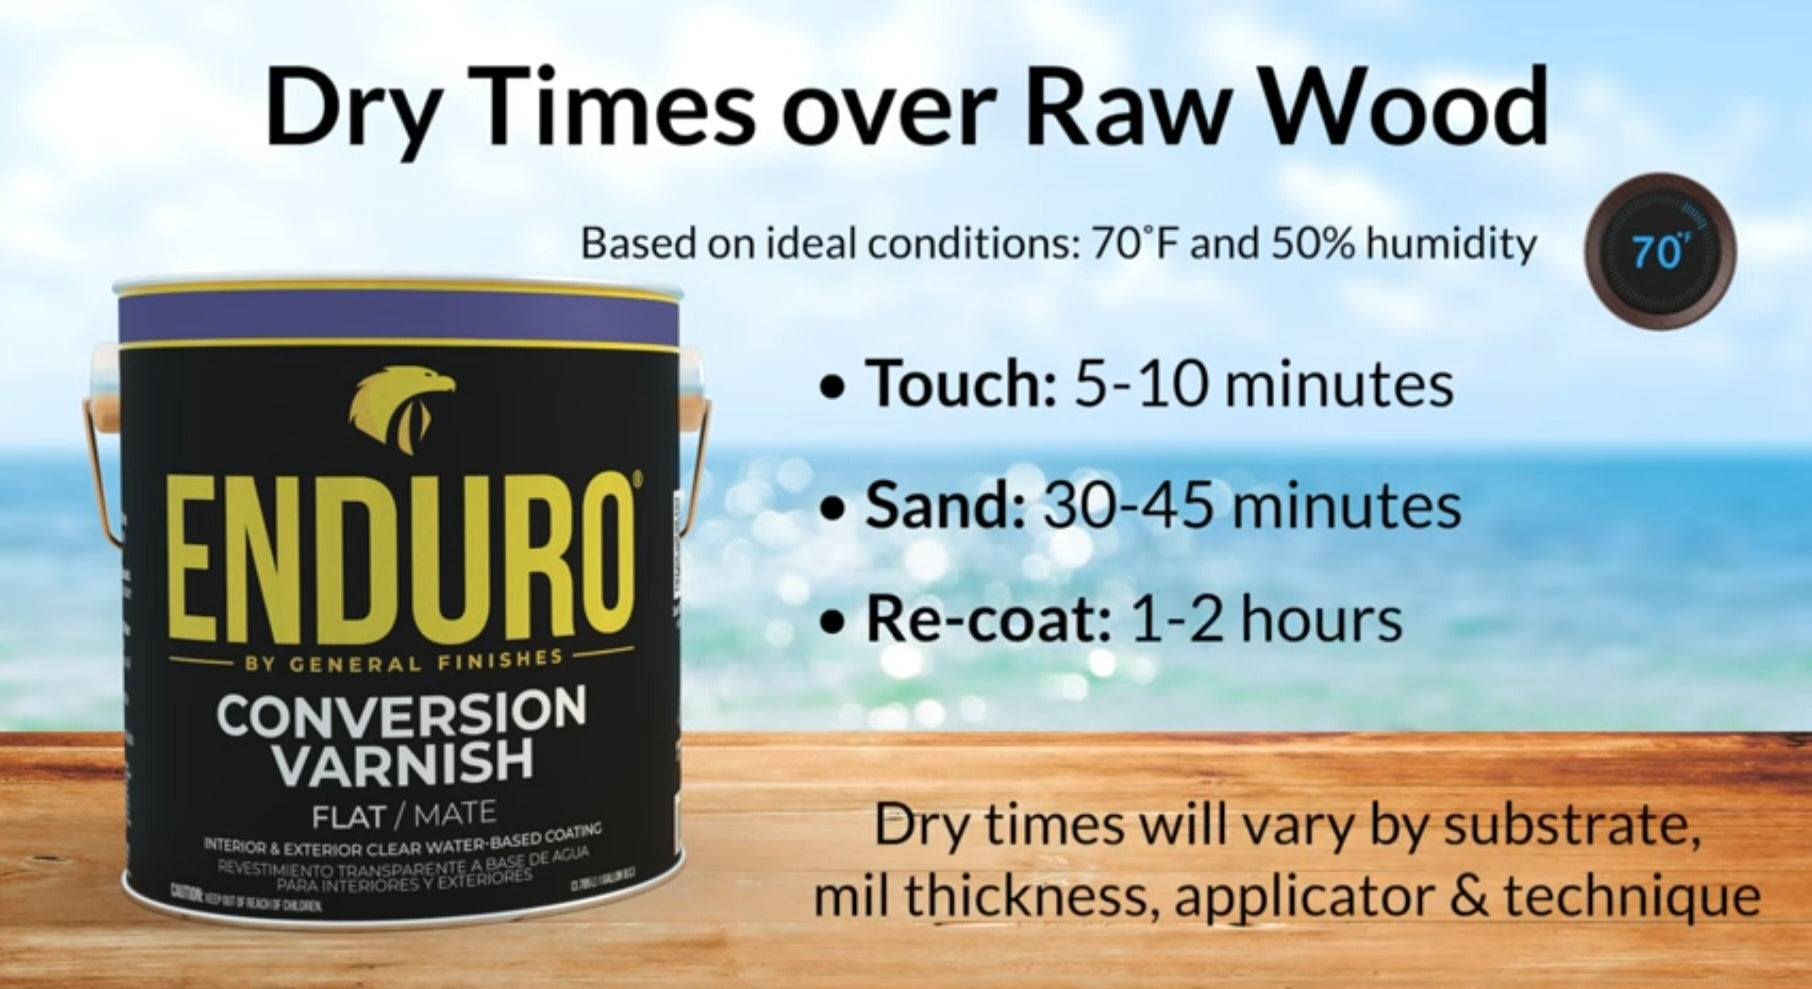 Enduro Pro Conversion Varnish Dry Times